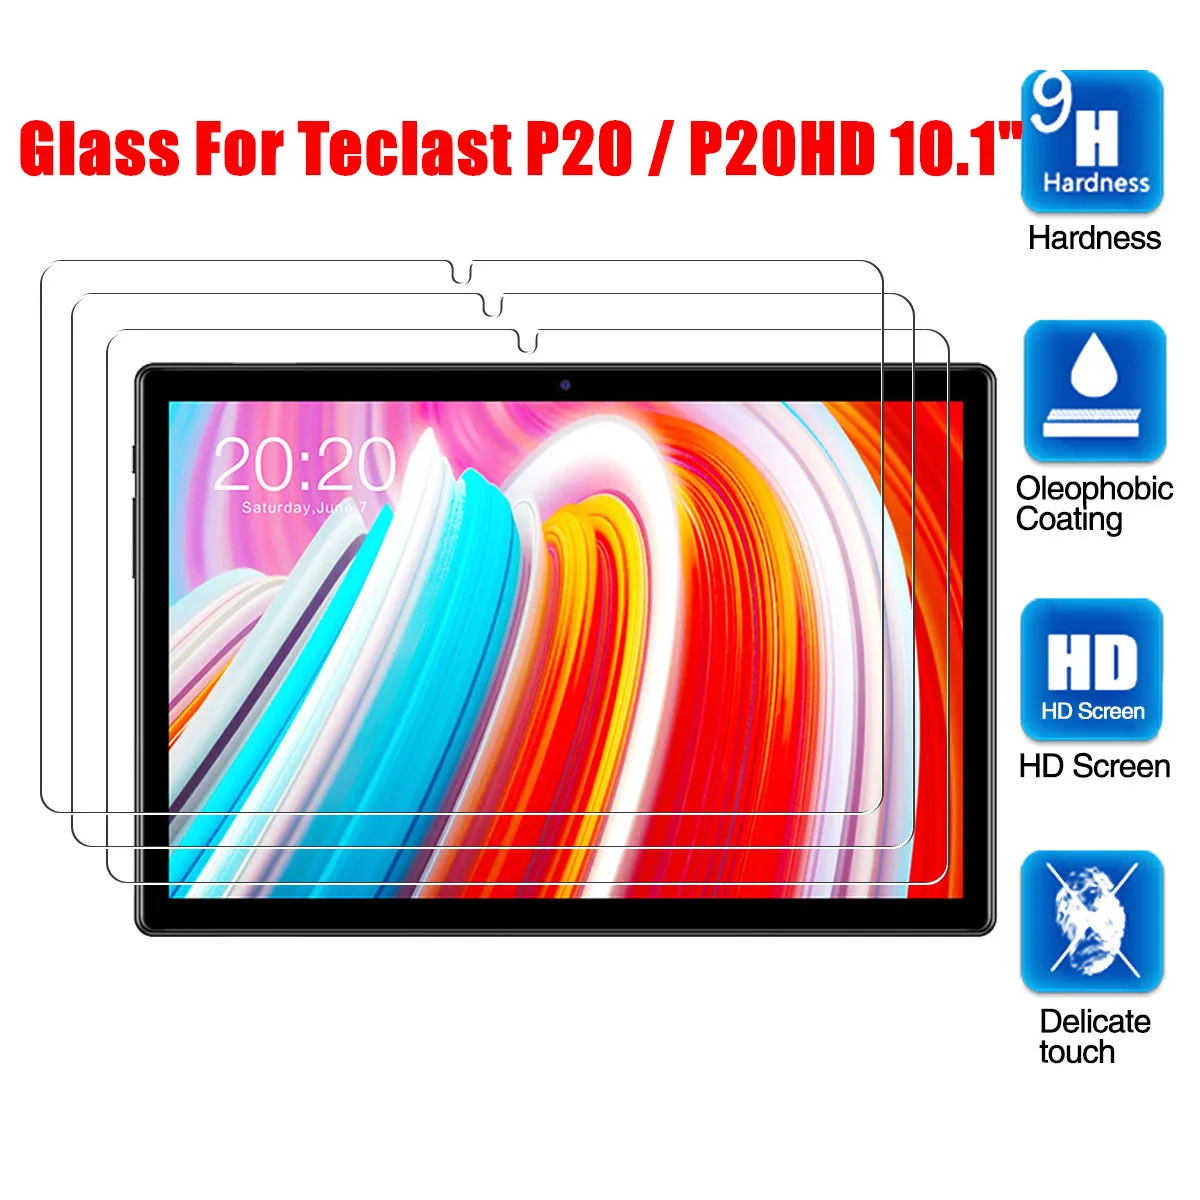 Защитное закаленное стекло для планшетного ПК Teclast P20HD, защитная пленка для планшета, защита от царапин, закаленное стекло для Teclast P20 10,1 